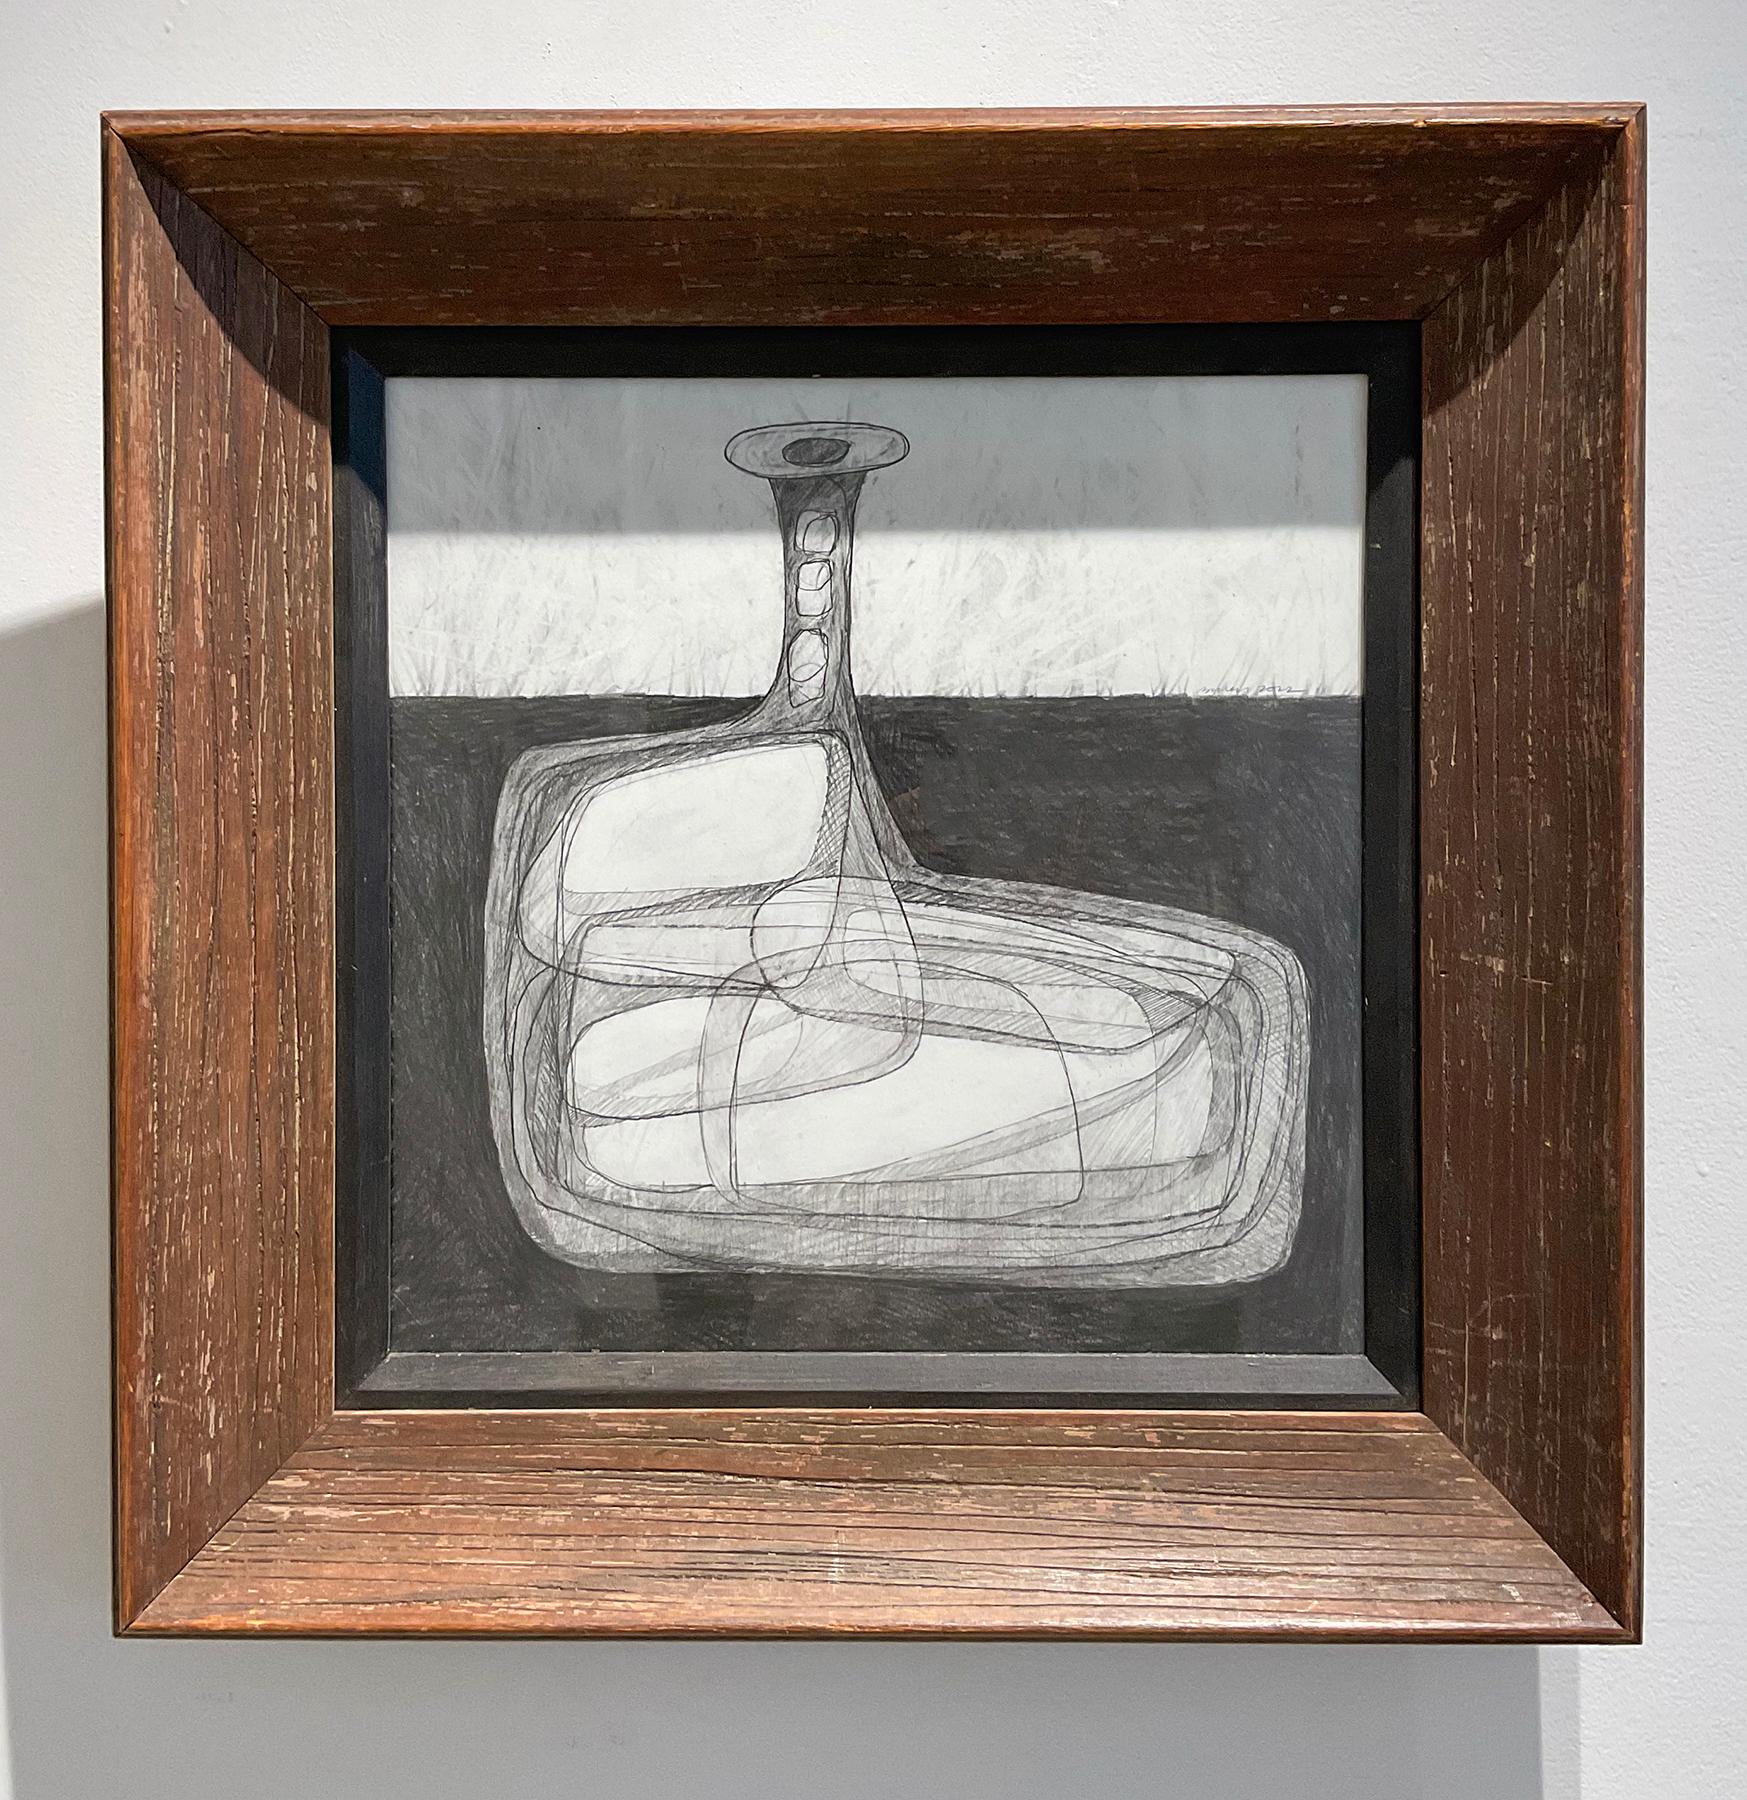 Single Bottle V: Abstract Cubist Style Morandi Bottle Still Life Pencil Drawing - Art by David Dew Bruner